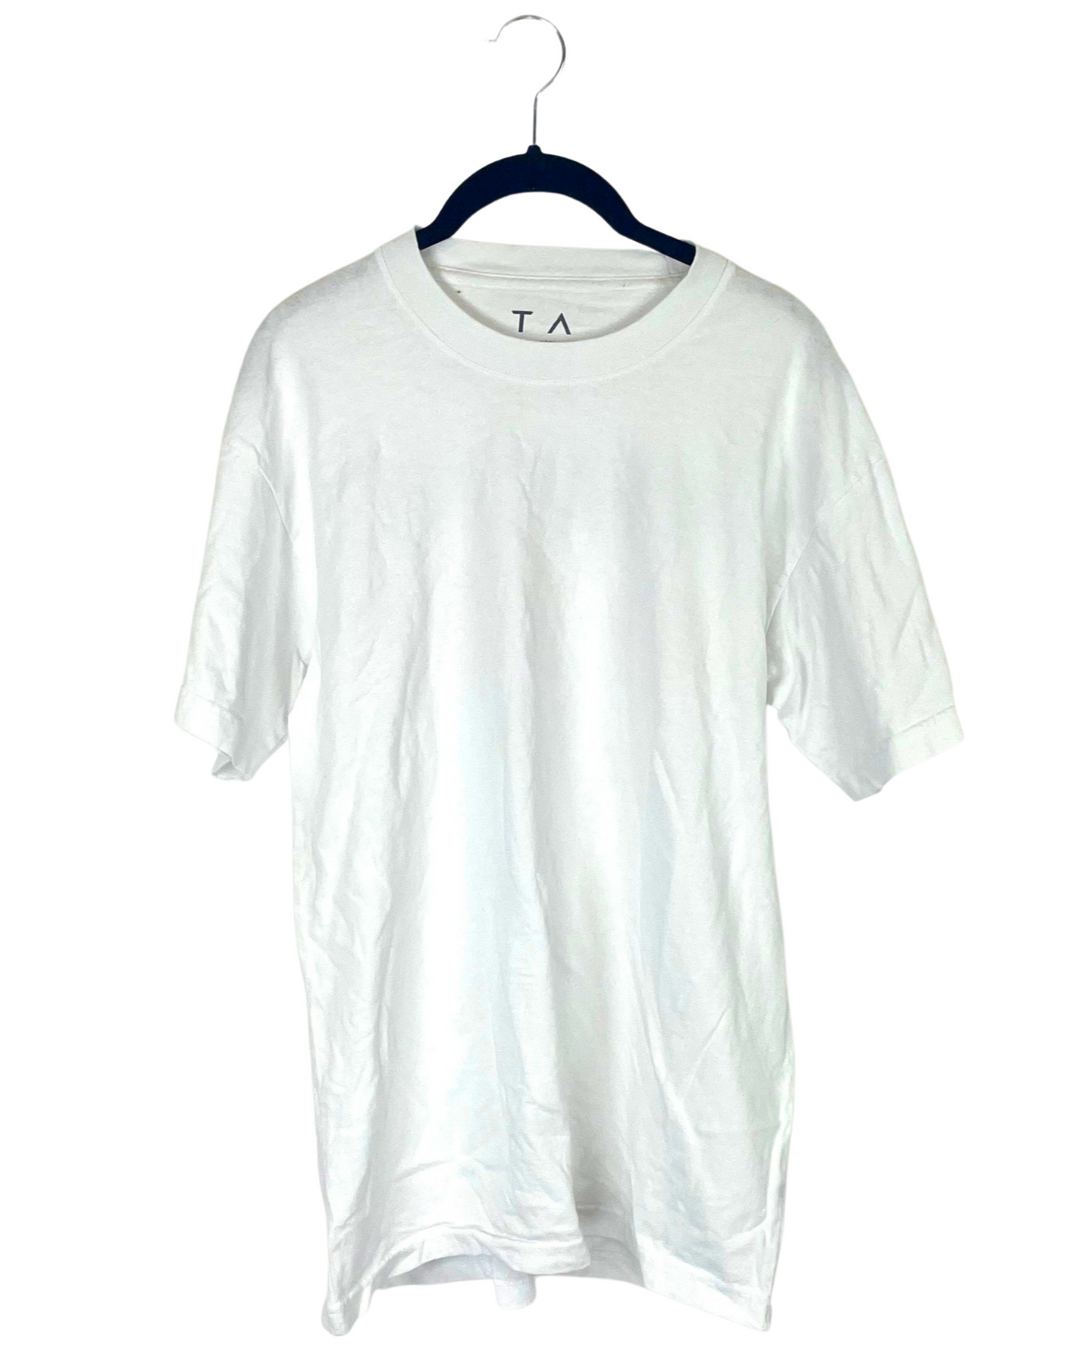 "My Body" White T-Shirt - Size 6-8